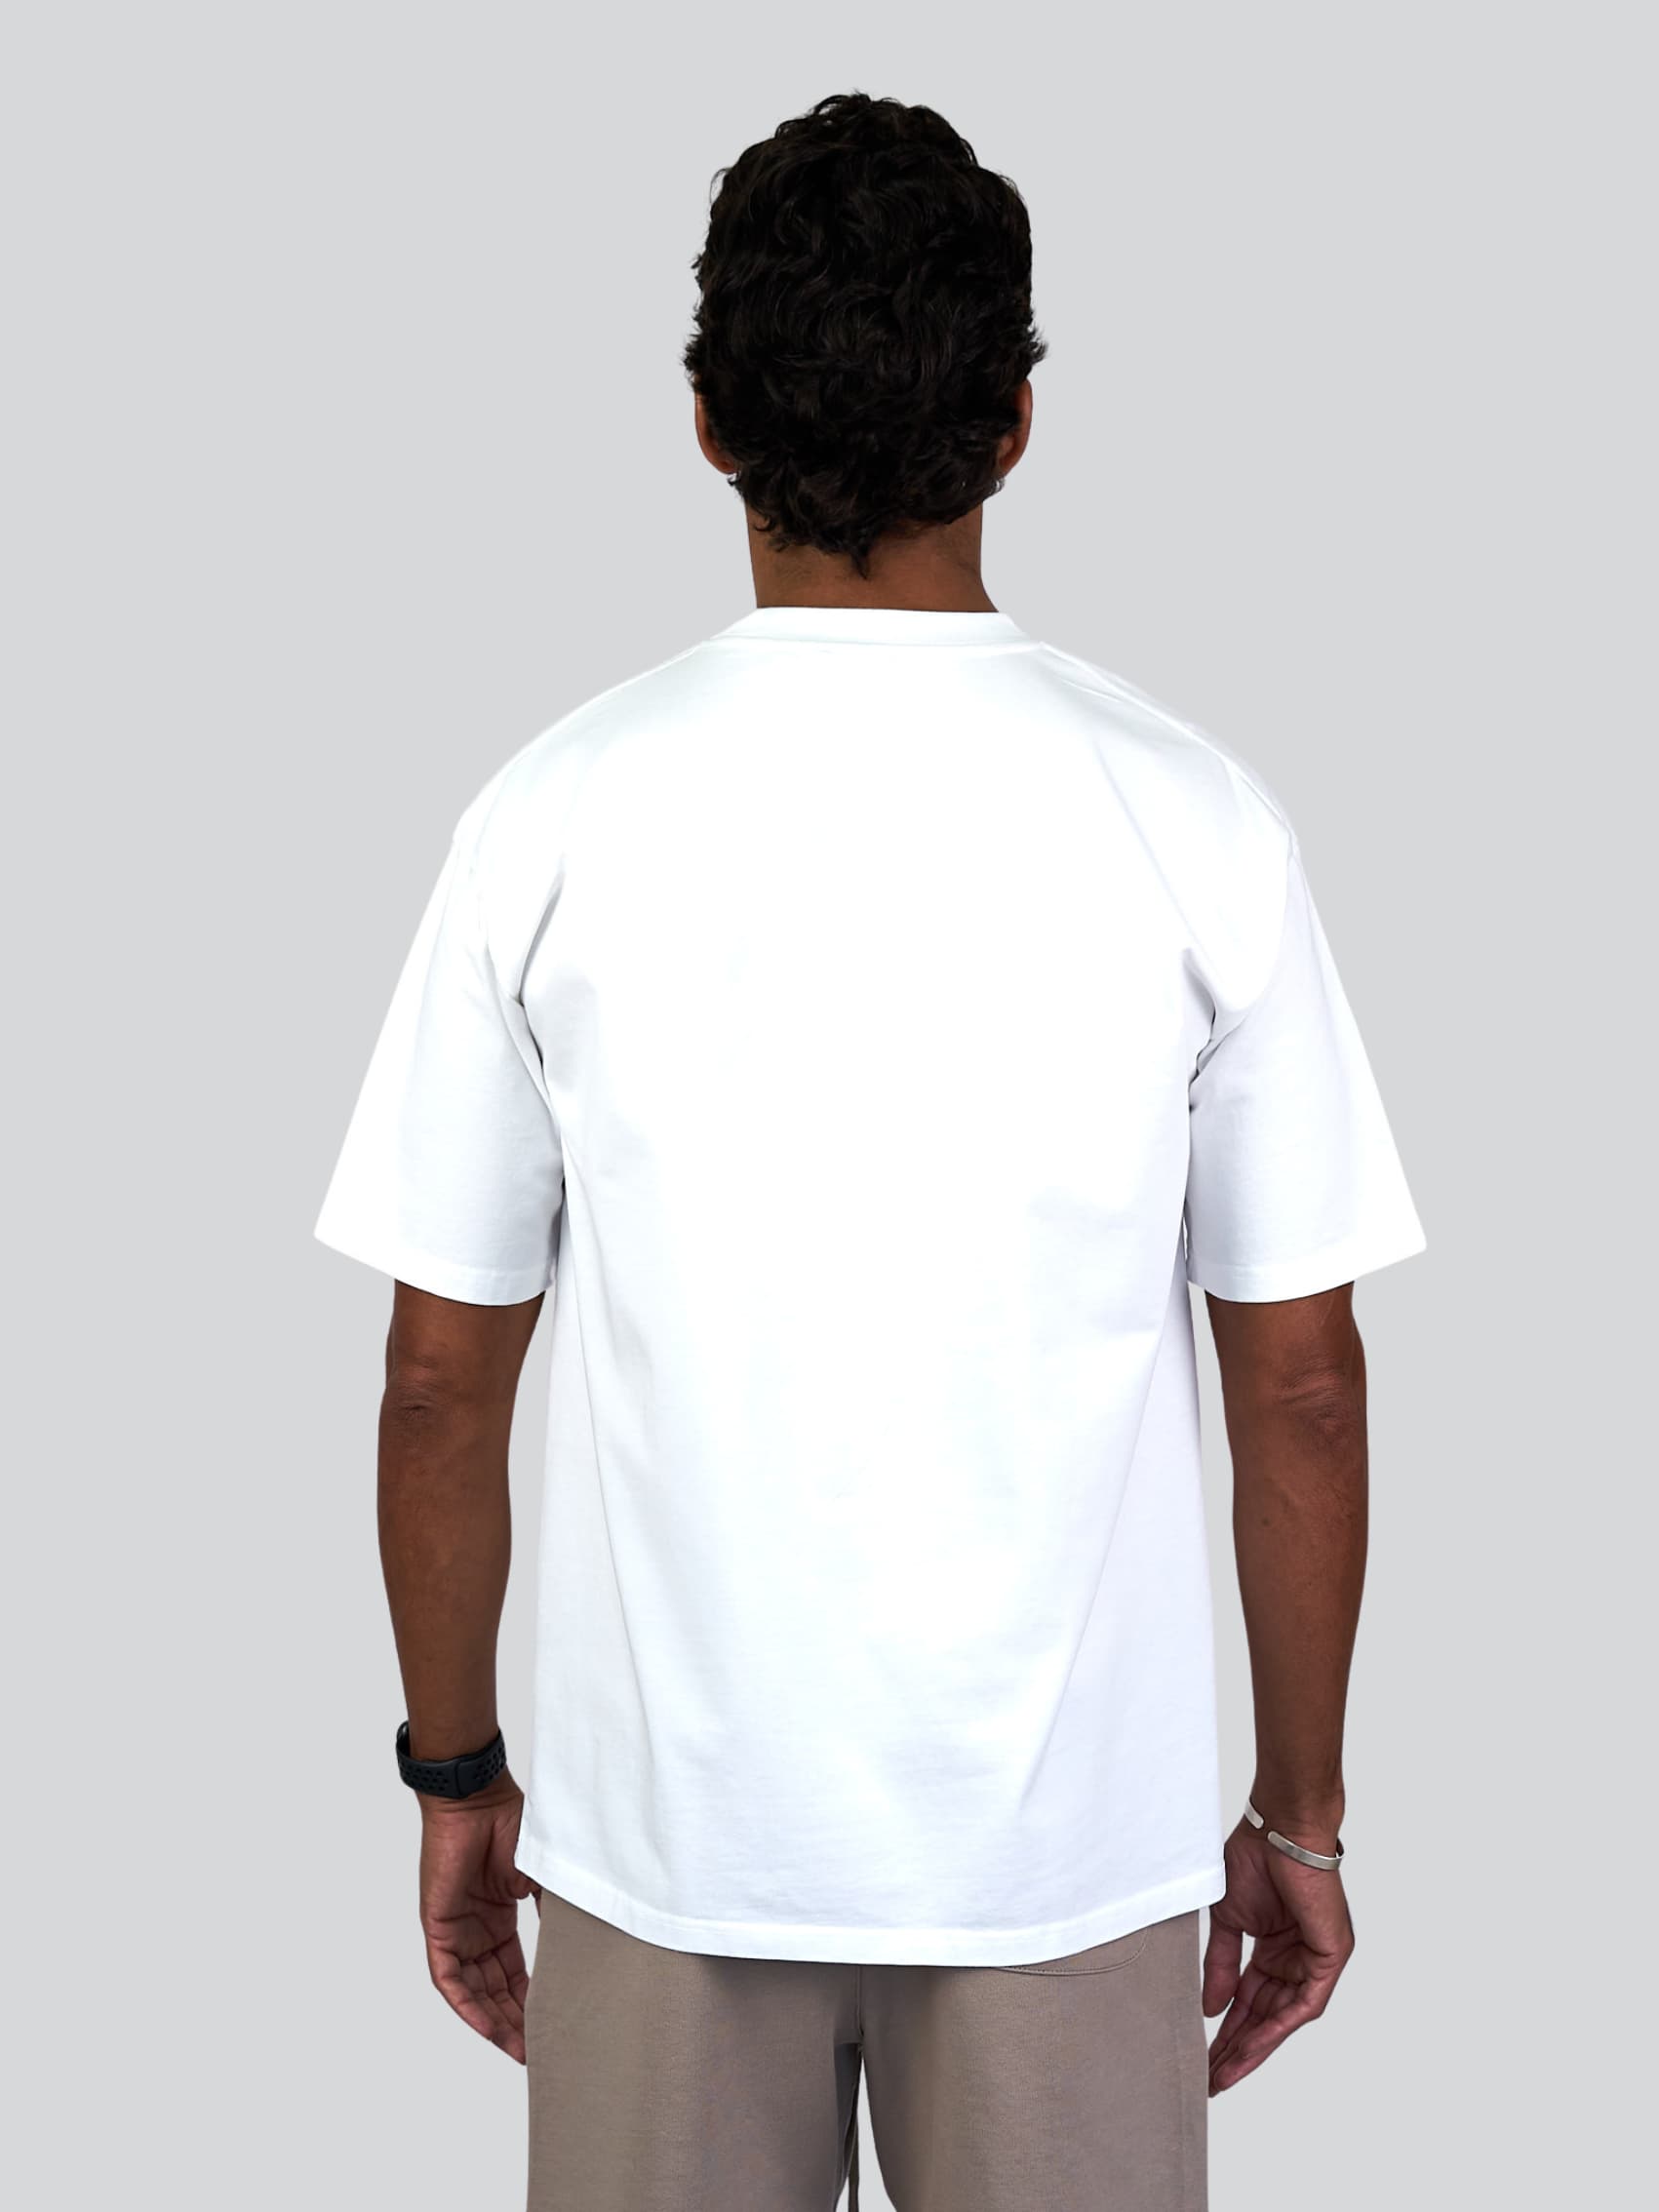 VANDAMM® Sportswear & Lifestyle T-Shirt White